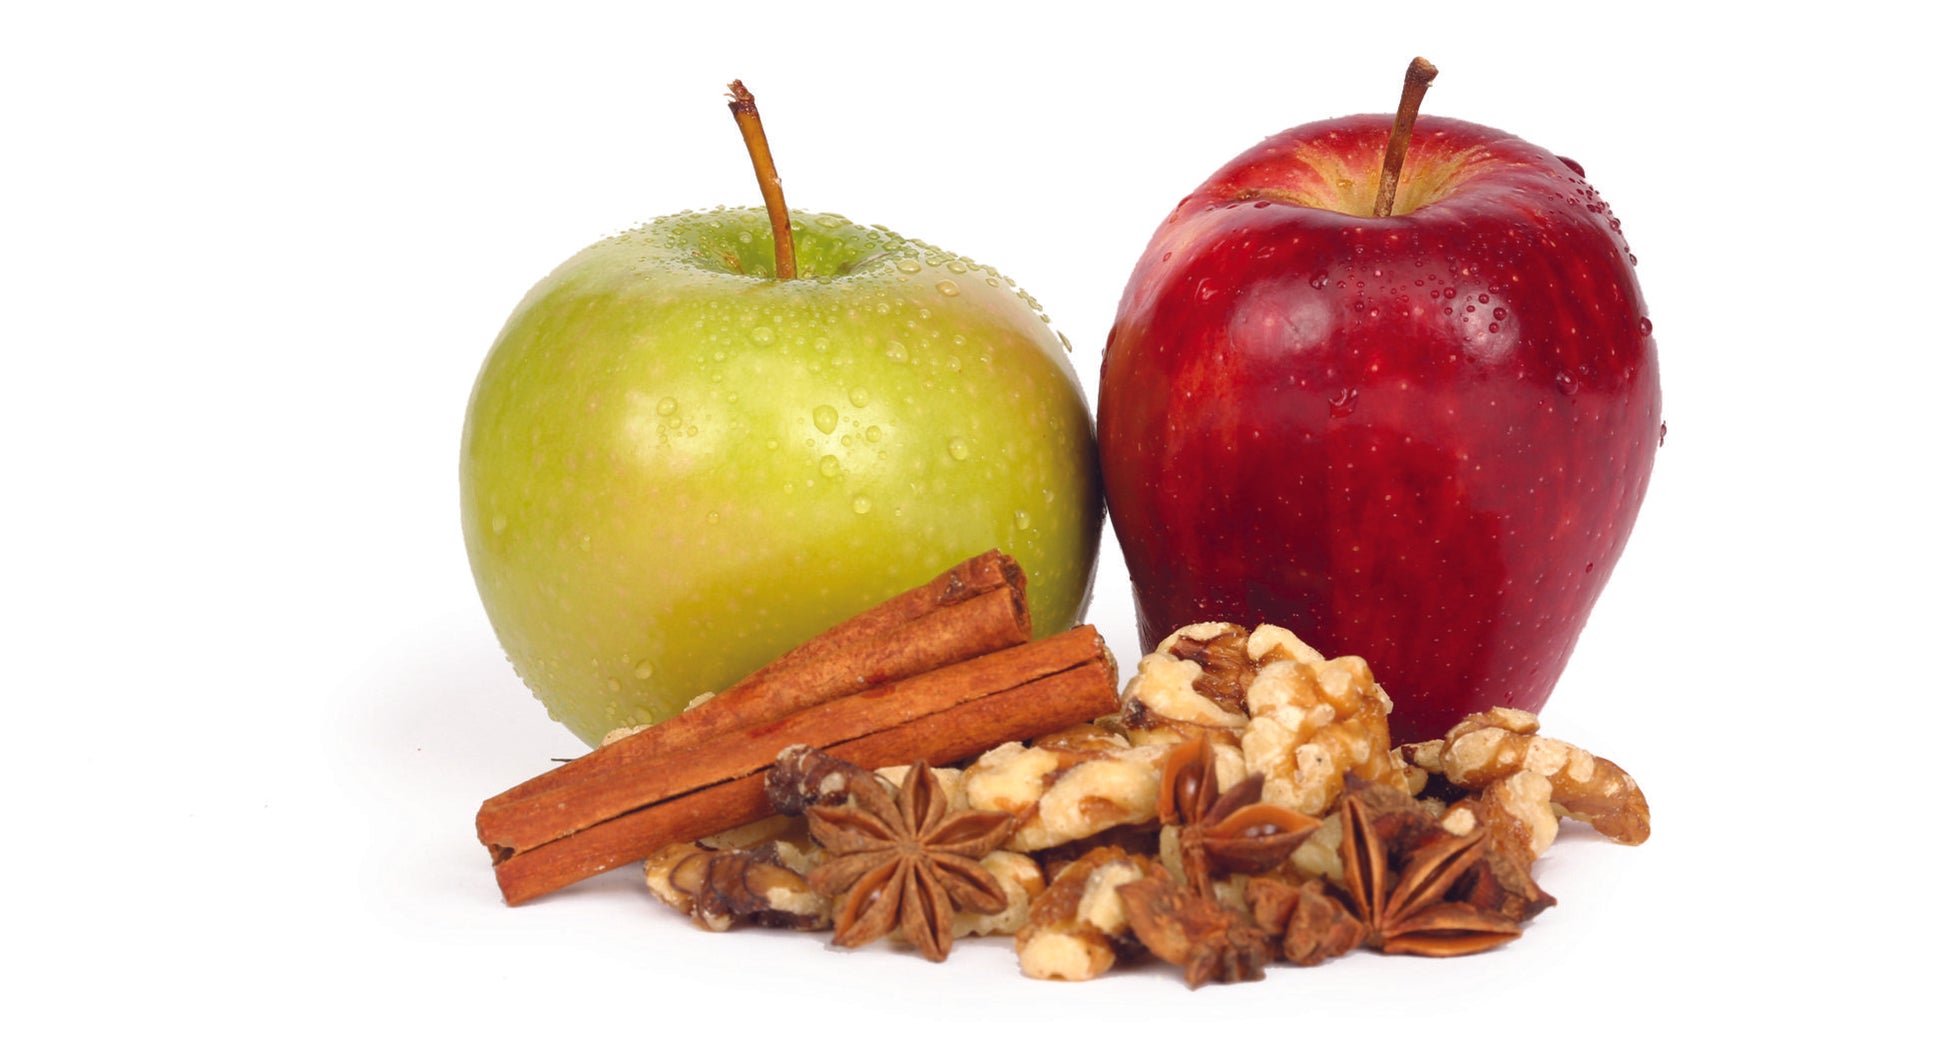 JoJé Apple Walnut Cake Bars ingredients: apples, cinnamon, star anise, walnuts